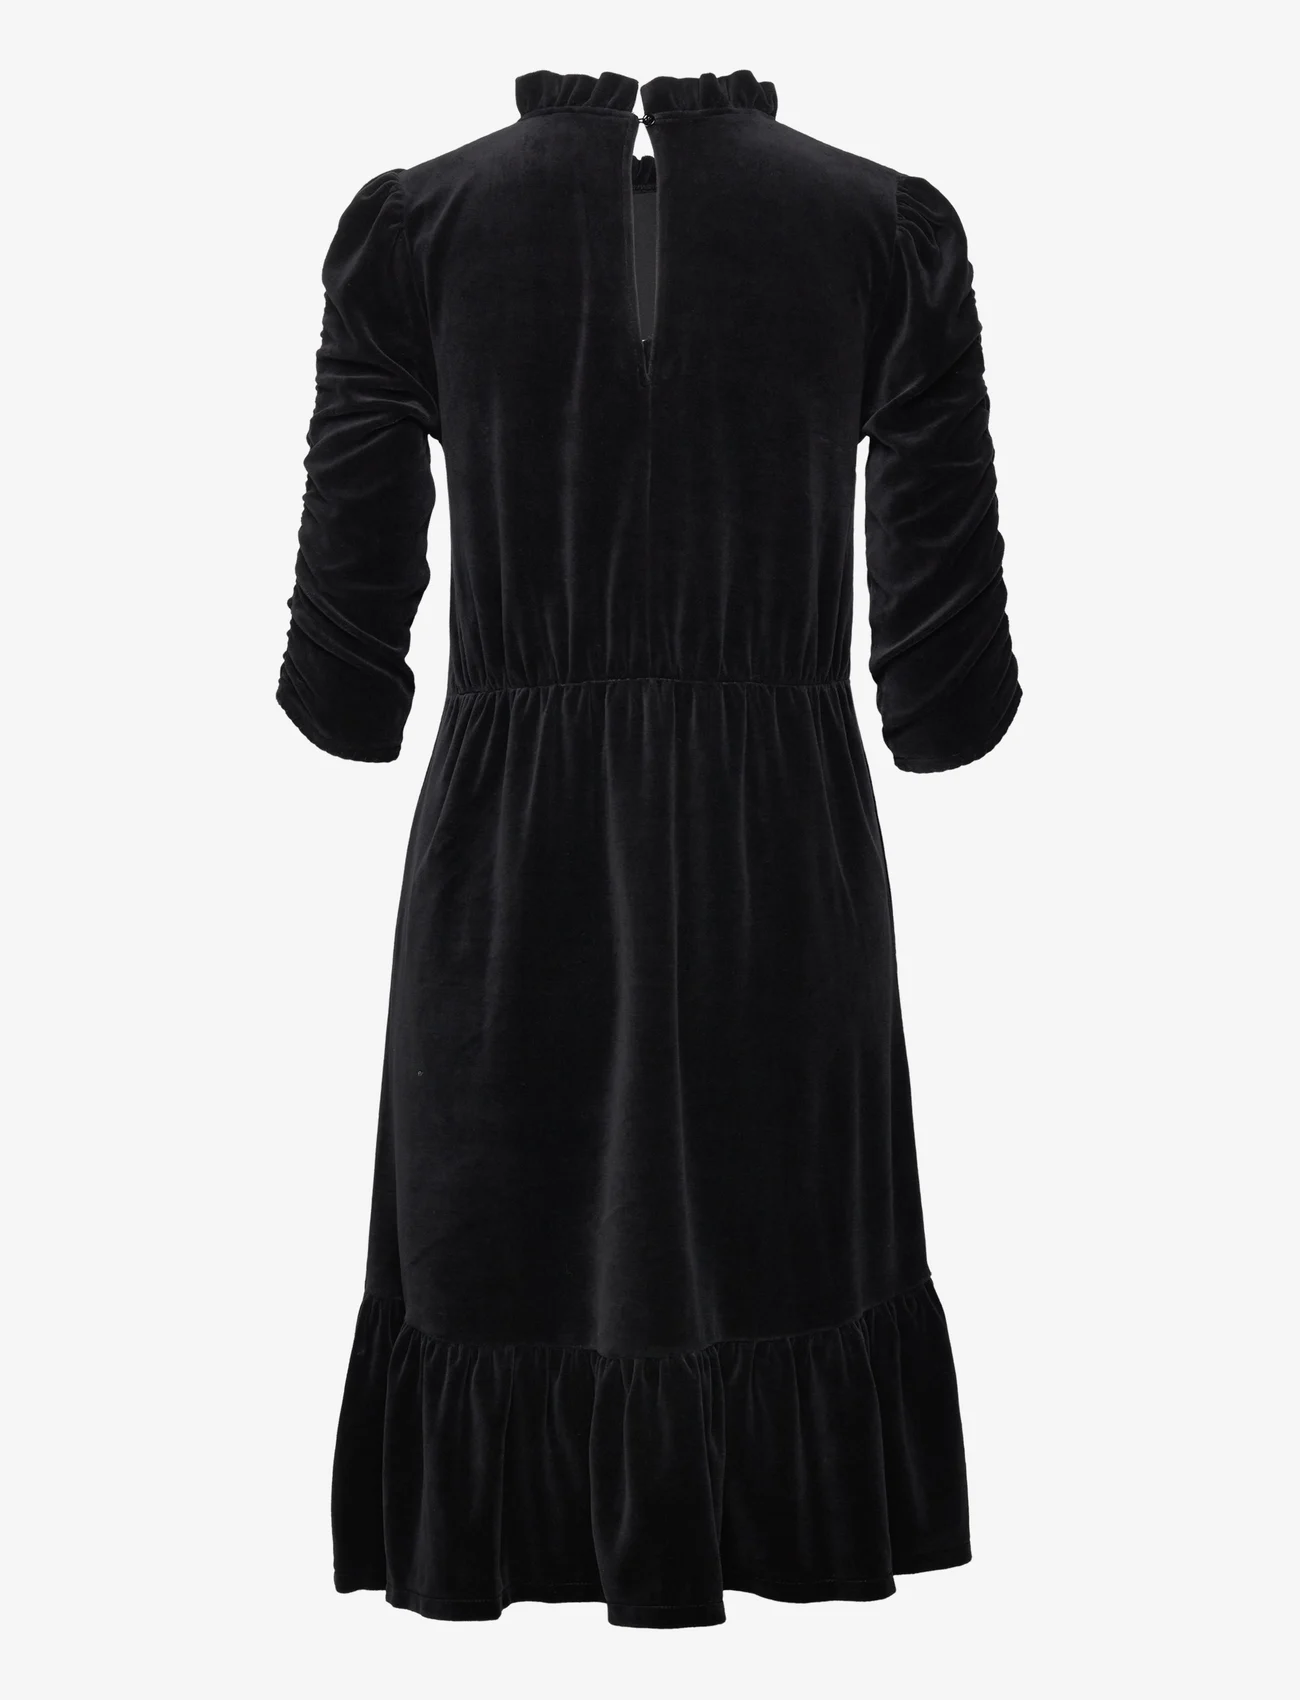 ODD MOLLY - Marion Dress - midimekot - almost black - 1